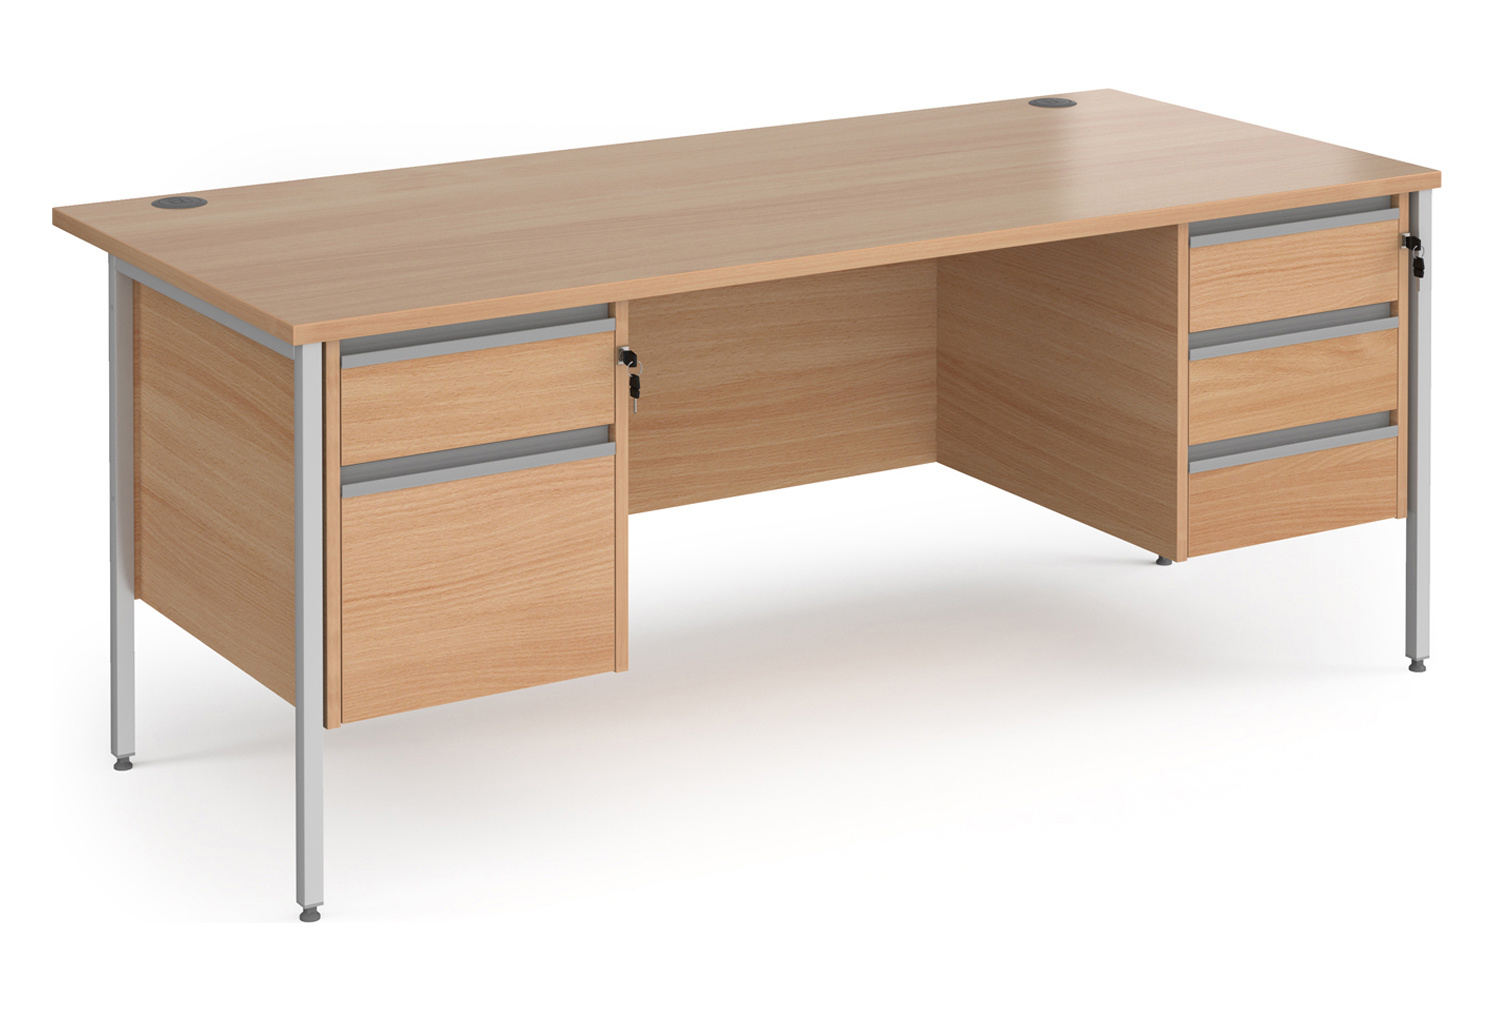 Value Line Classic+ Rectangular H-Leg Office Desk 2+3 Drawers (Silver Leg), 180wx80dx73h (cm), Beech, Express Delivery